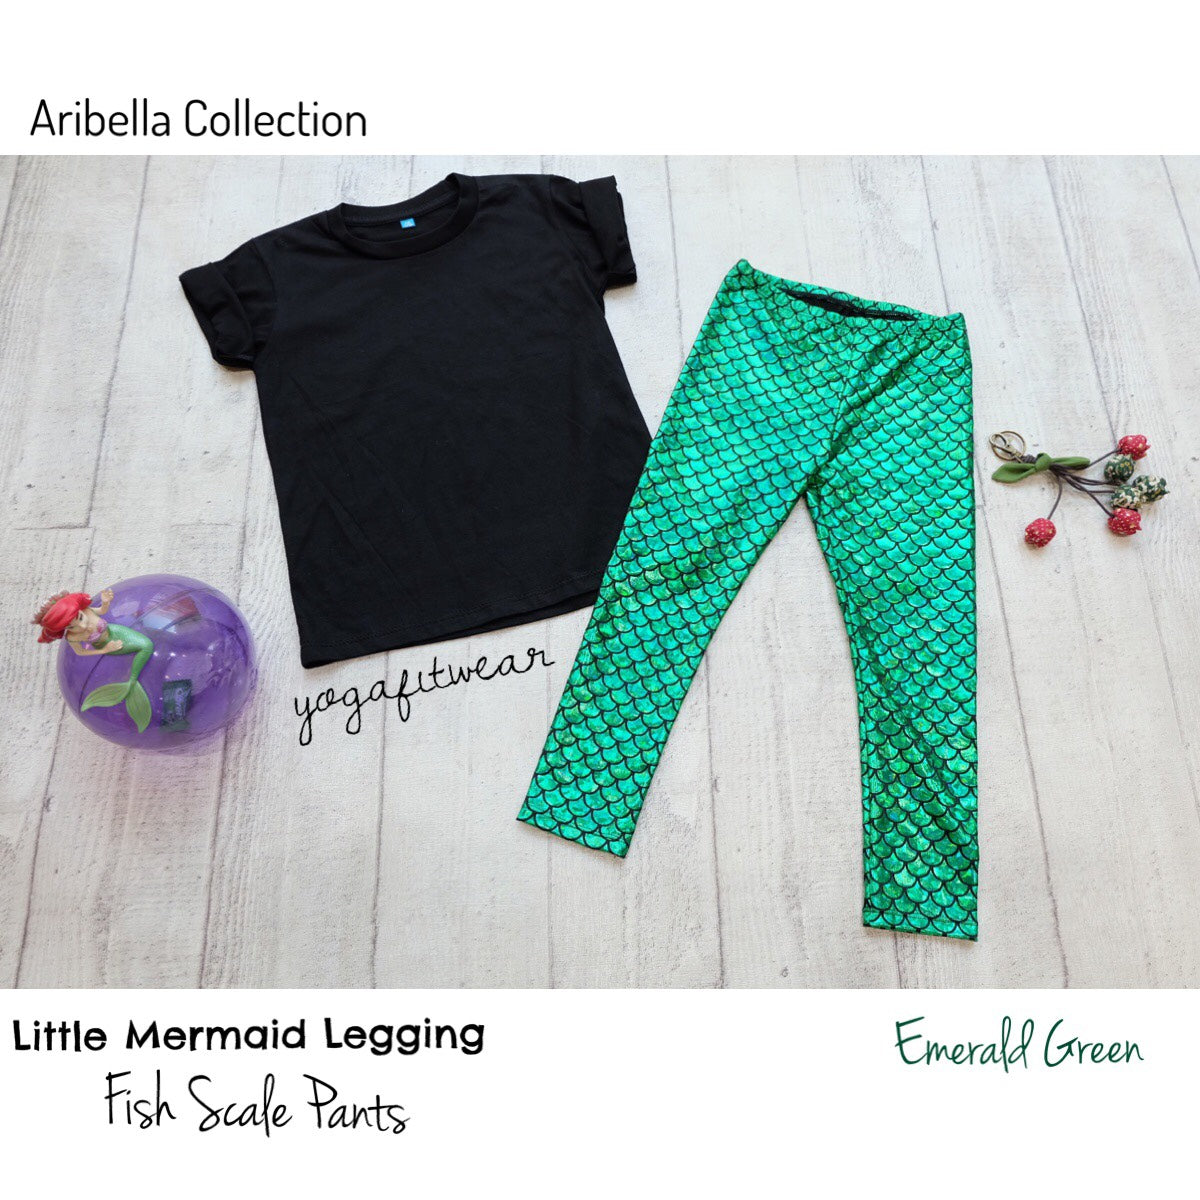 Yogafitwear - Little Mermaid Legging Fish Scale Pants (Emerald Green) (NA00002)